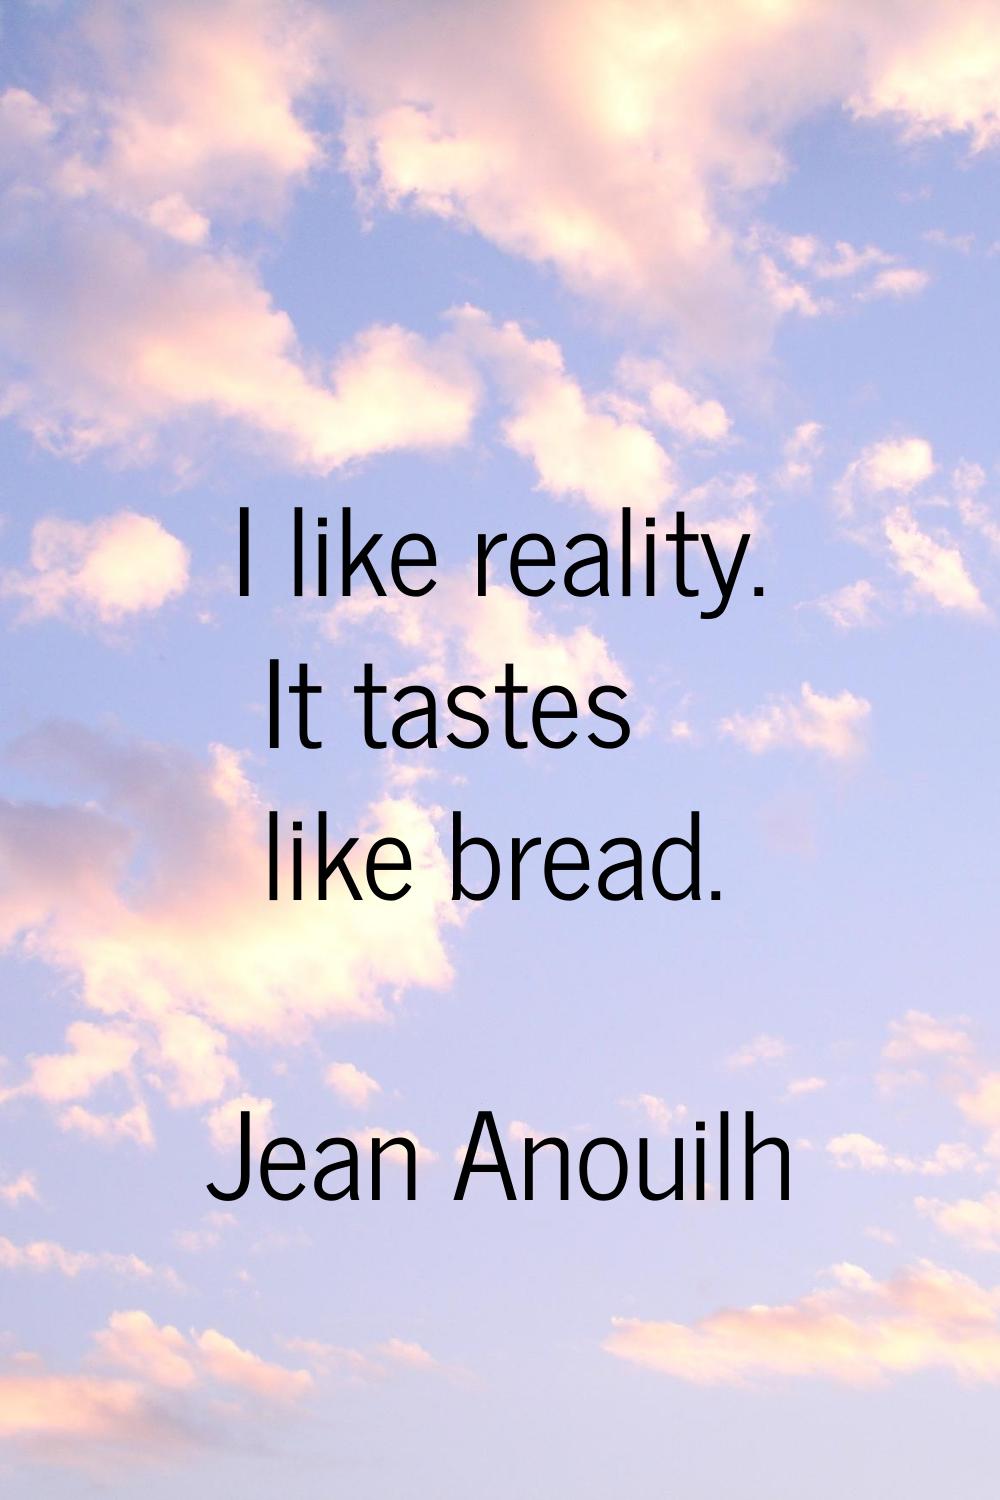 I like reality. It tastes like bread.